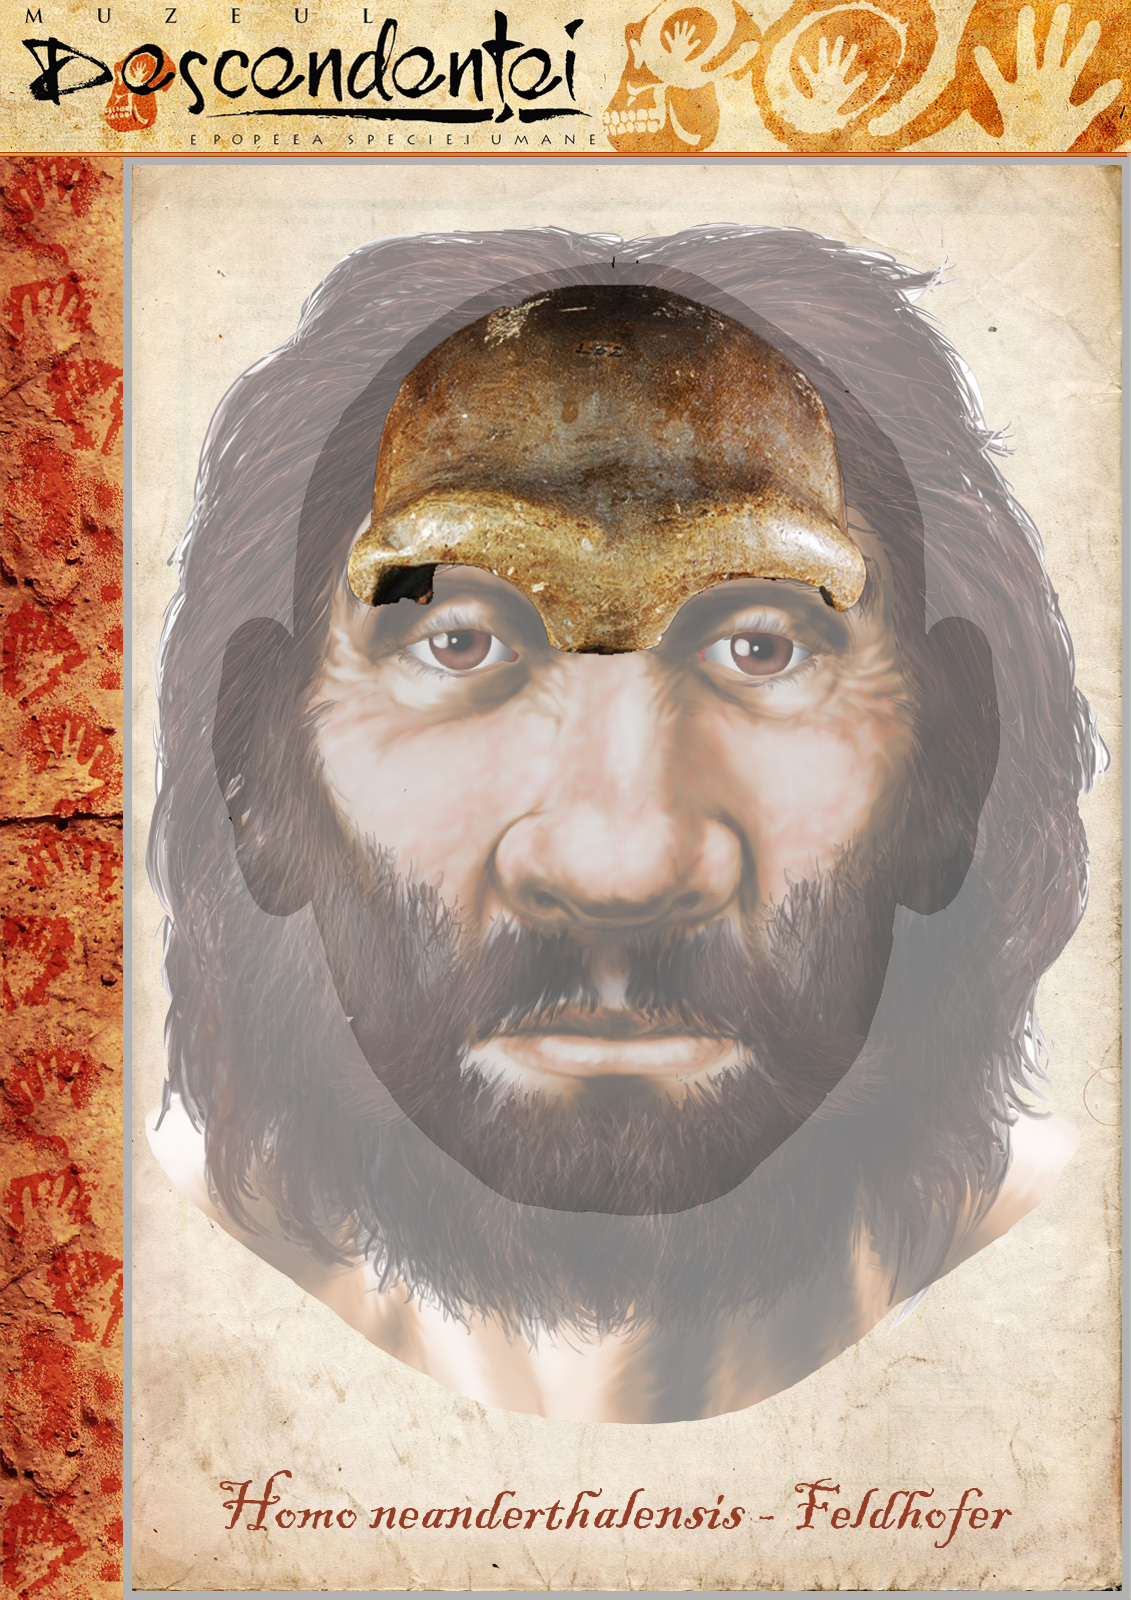 homo neanderthal feldhofer evolution human sahelanthropus ardipithecus kenyanthropus paranthropus habilis erectus ergaster antecessor heidelbergensis Lucy